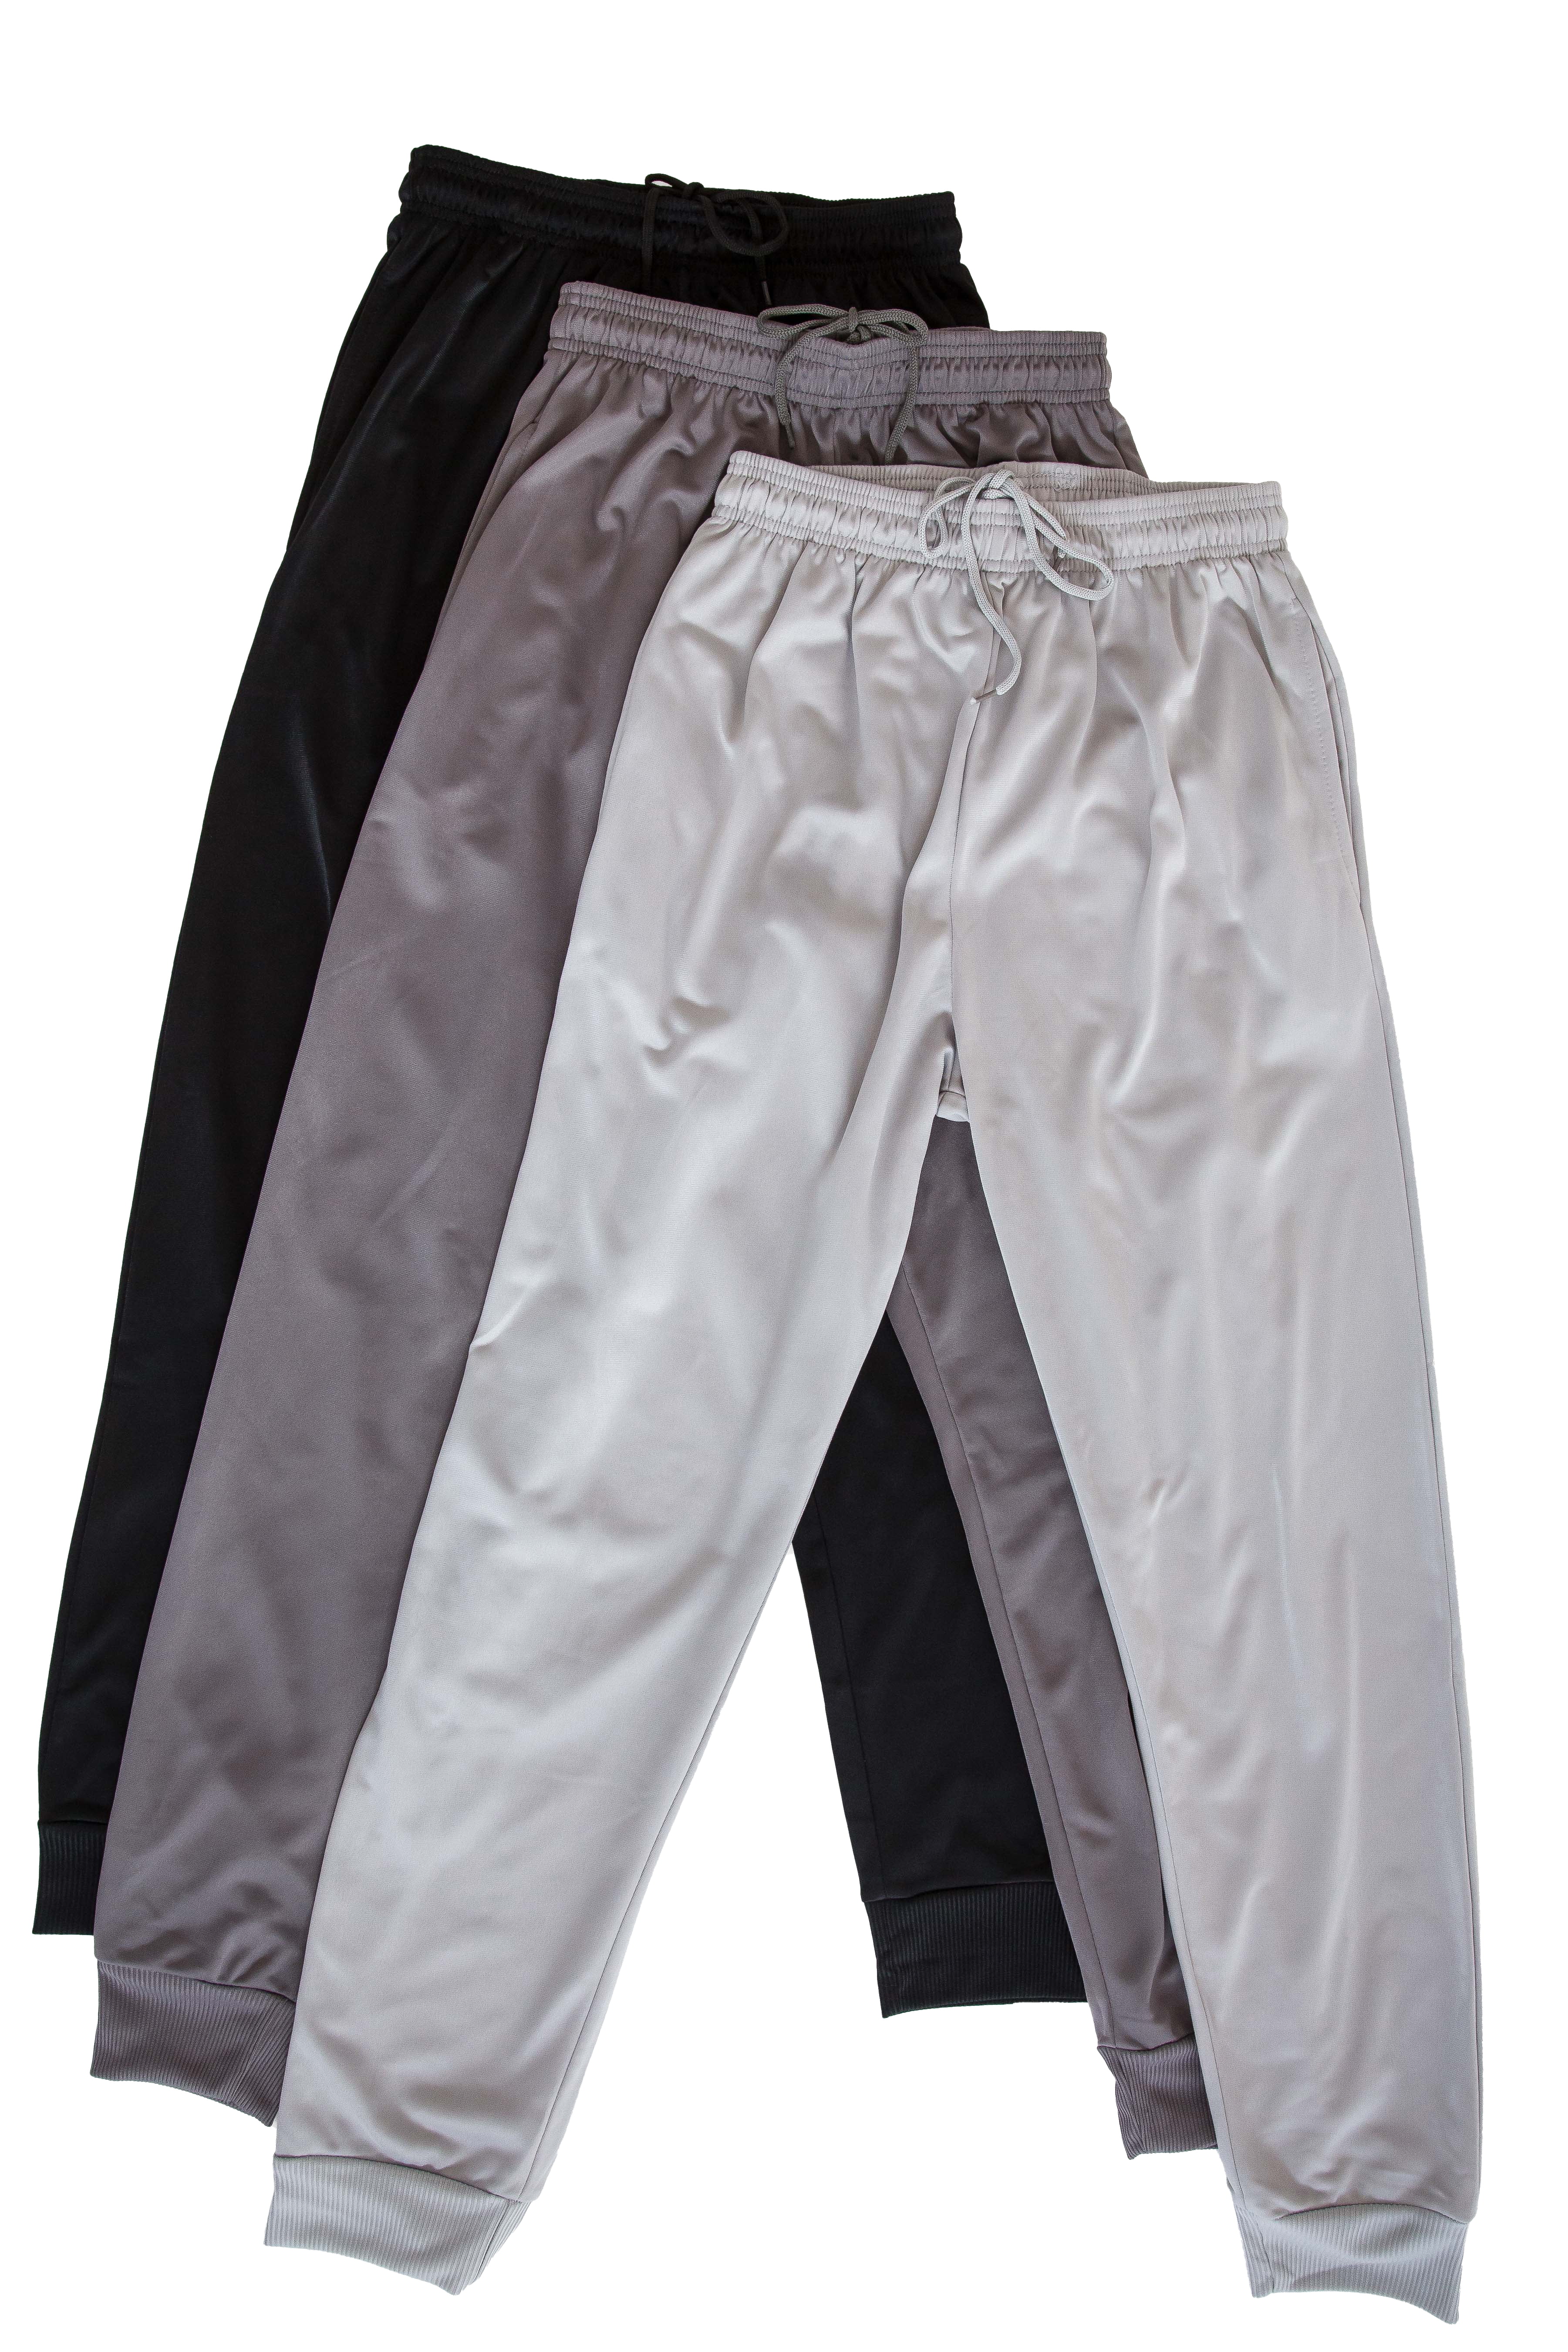 4fit Mens Cotton Fleece Shorts Jogging Casual Home Wear Martial Art Jogger White 